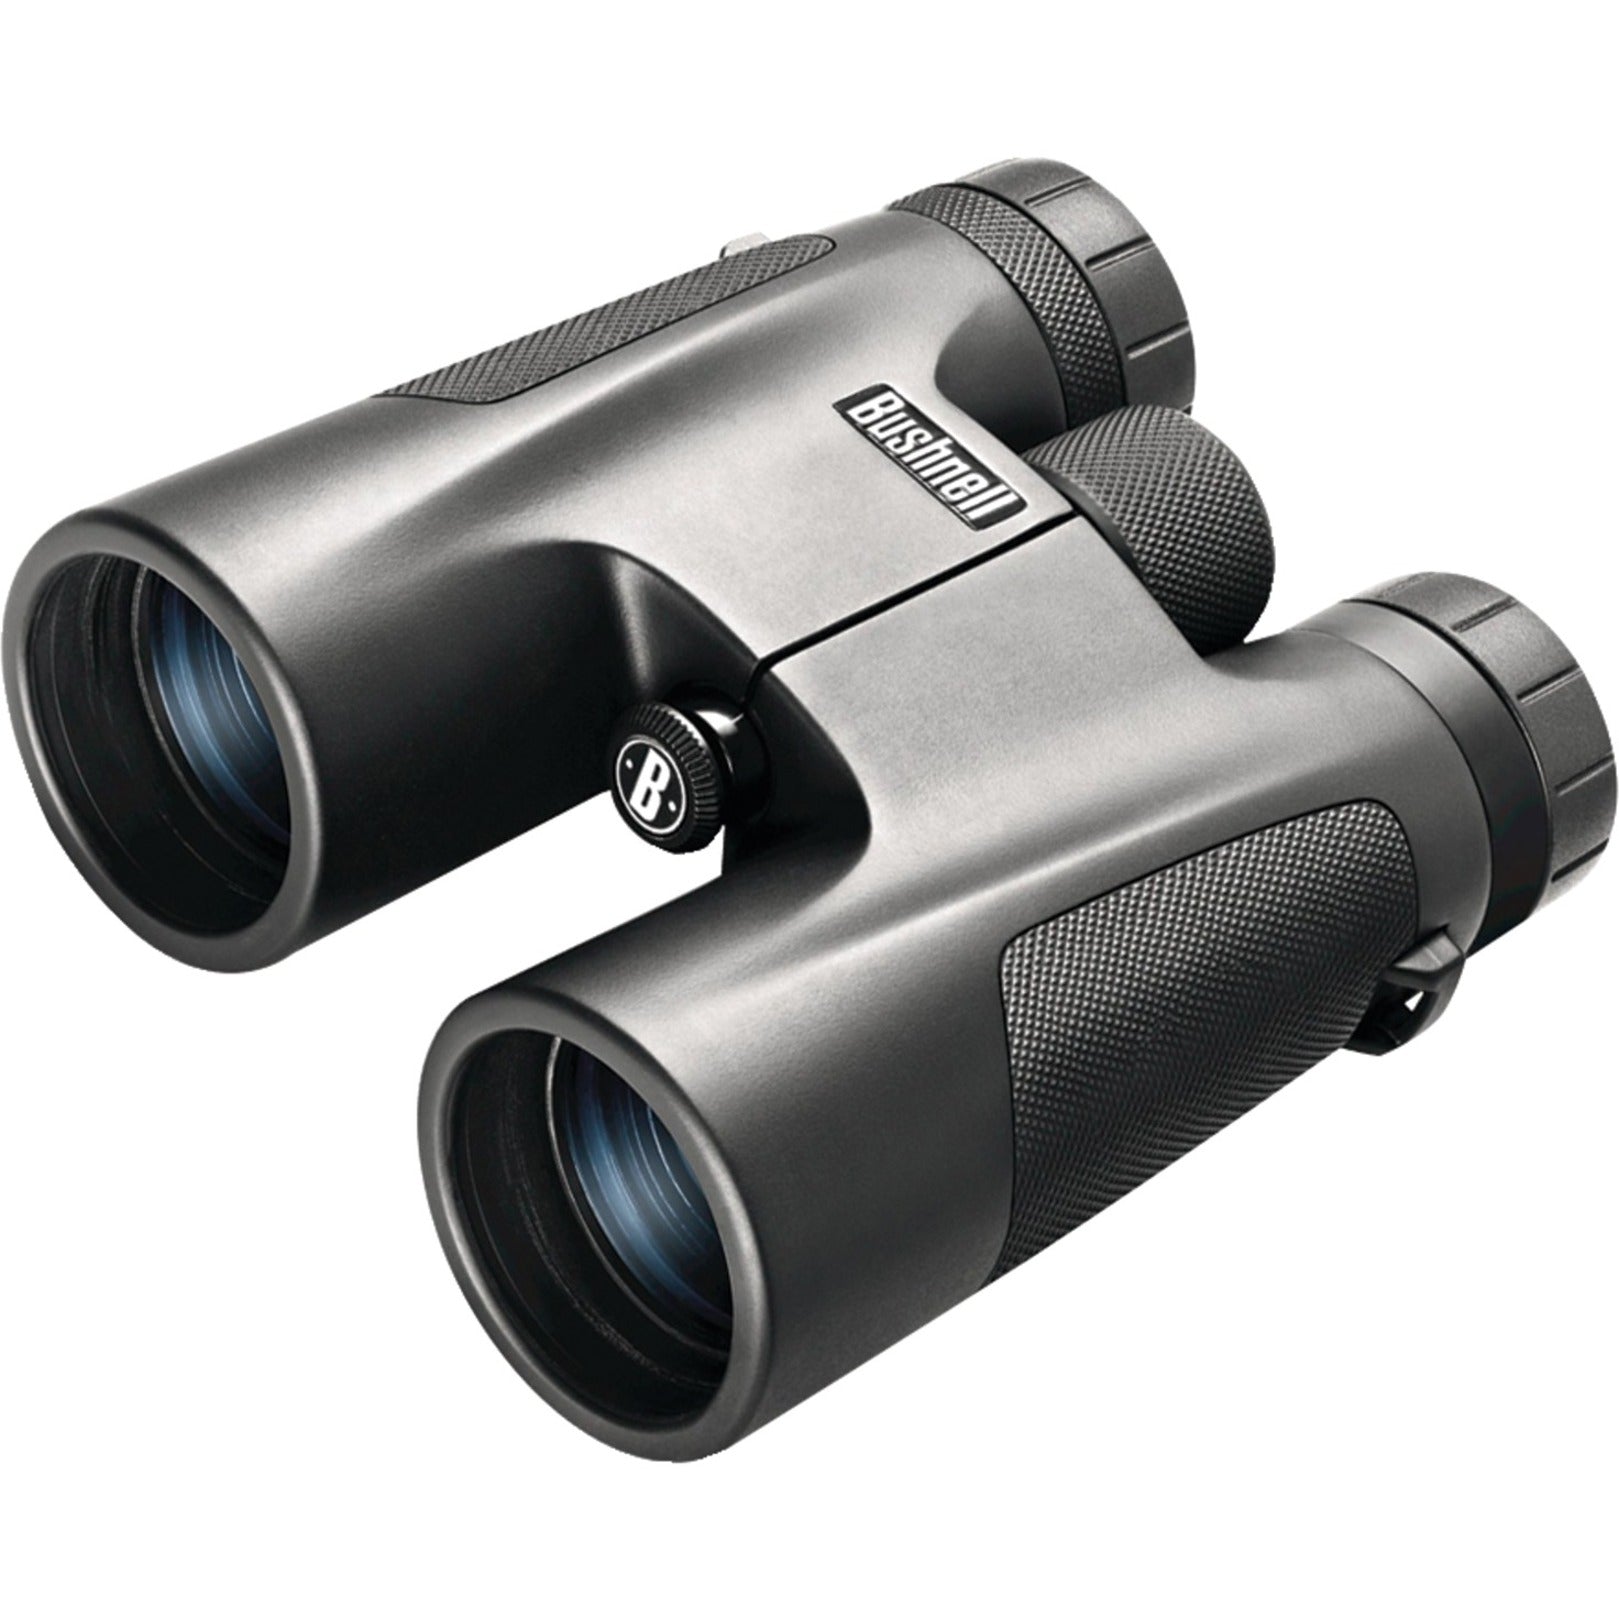 Bushnell 141042 PowerView 10x42 Binocular, Lifetime Warranty, Hunting, Outdoor